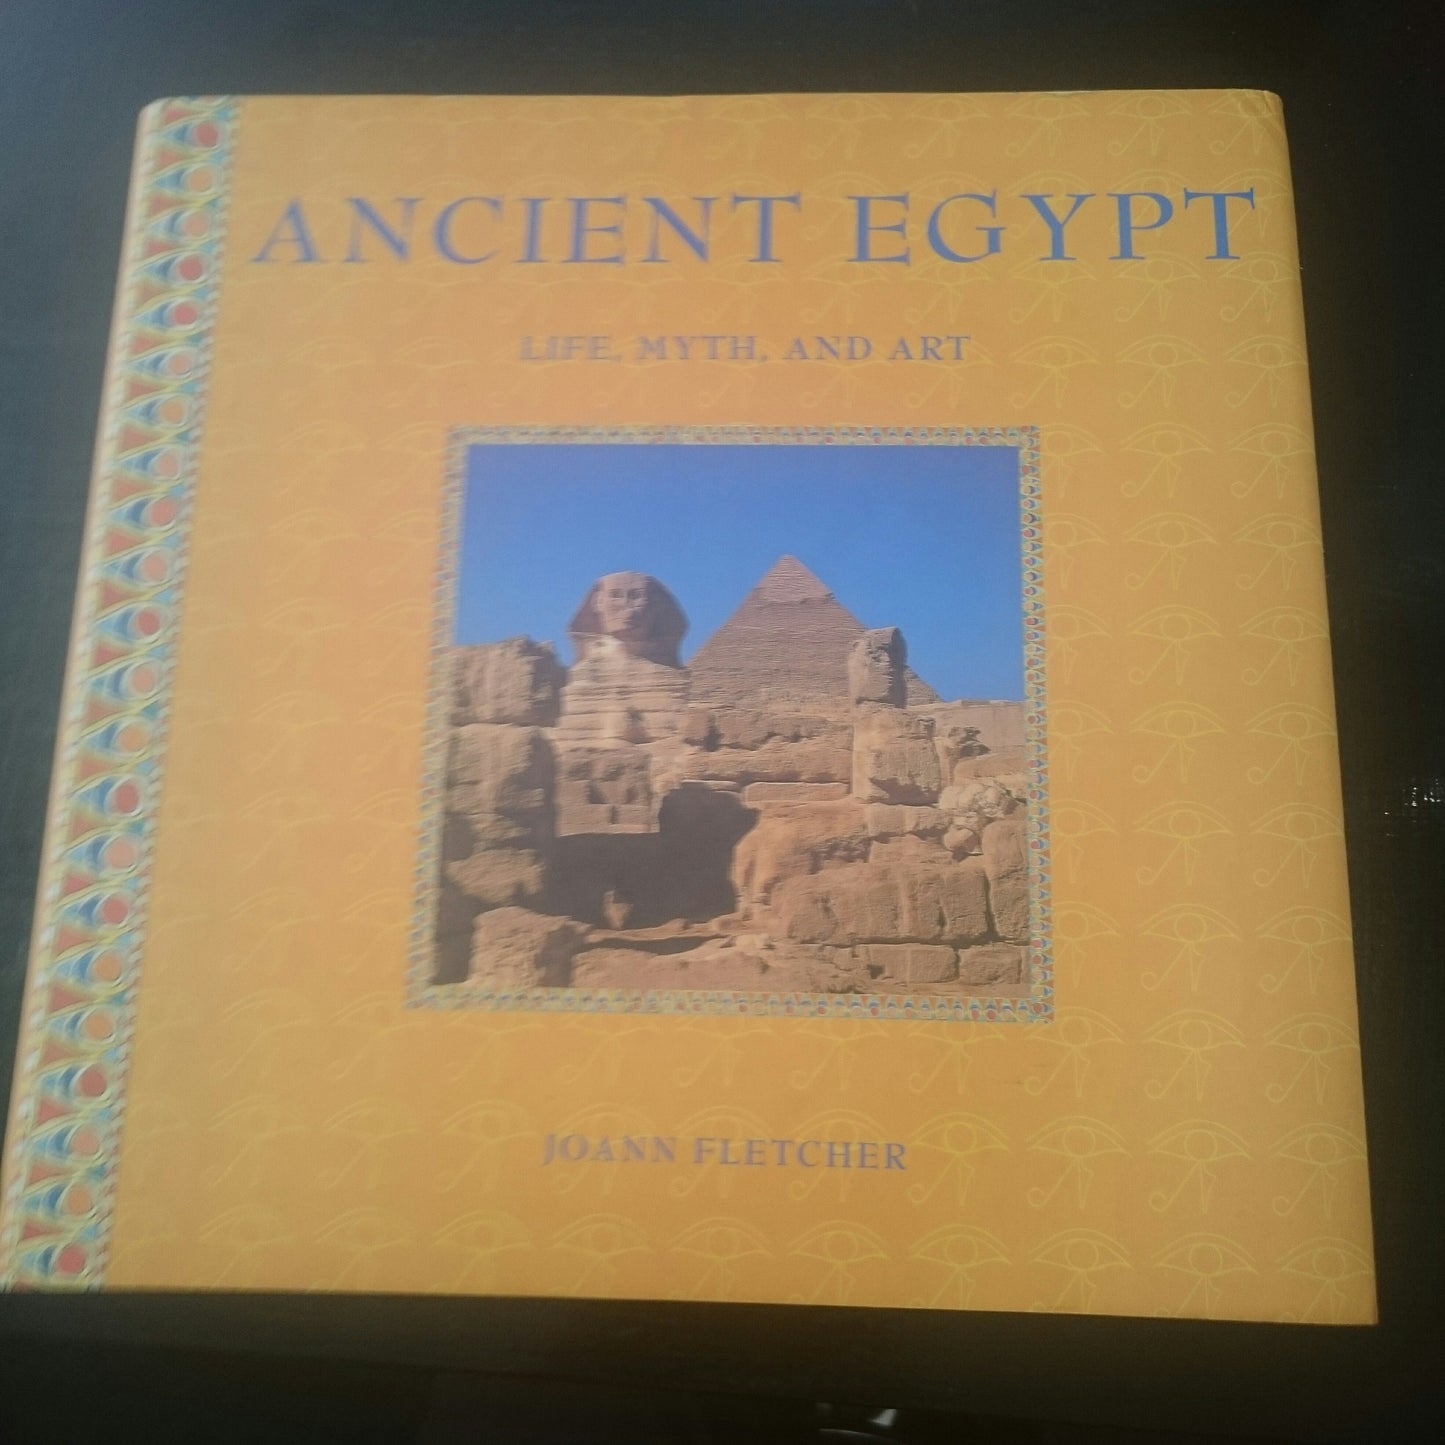 ANCIENT EGYPT
LIFE, MYTH, AND ART